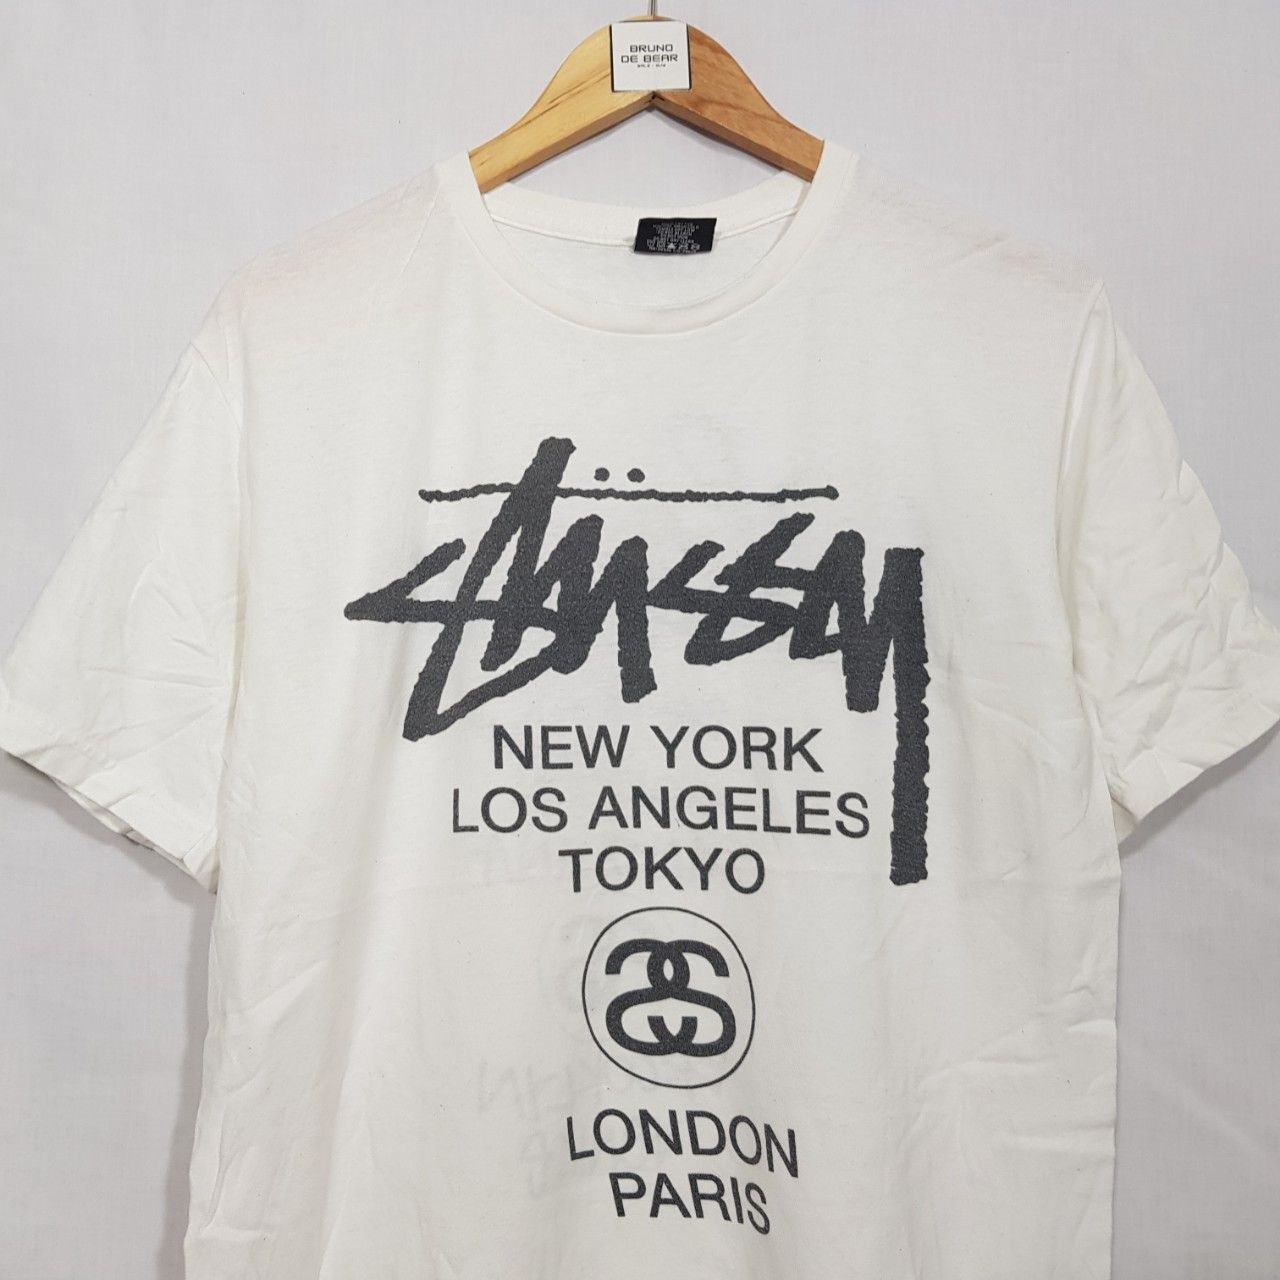 Stussy STUSSY Shirt New York Los Angeles Tokyo London Paris Size US S / EU 44-46 / 1 - 1 Preview